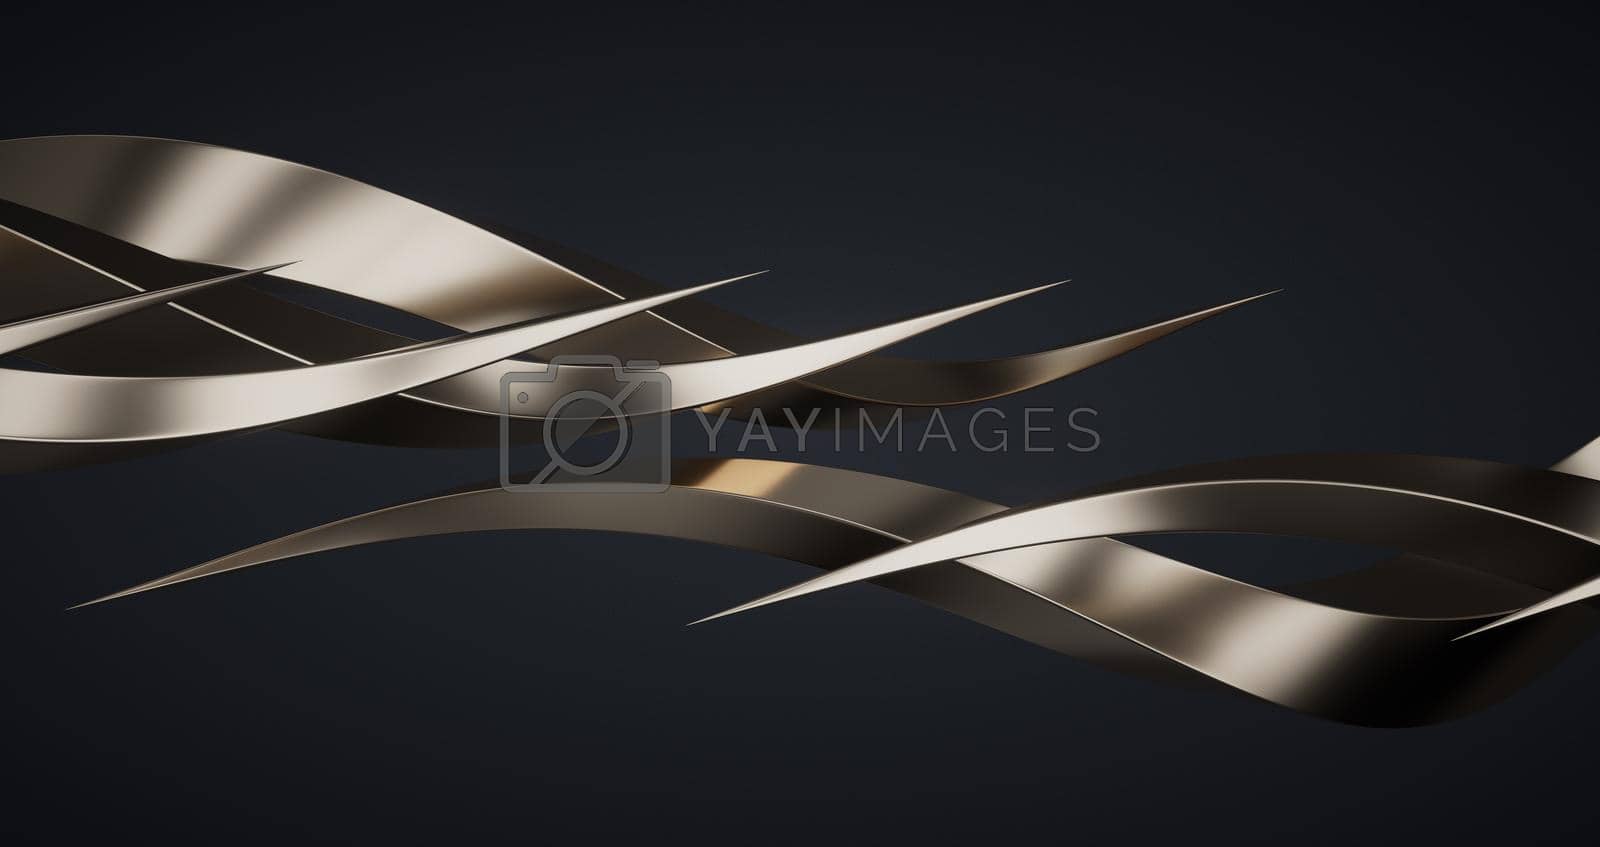 Royalty free image of Metallic curve geometry background, 3d rendering. by vinkfan